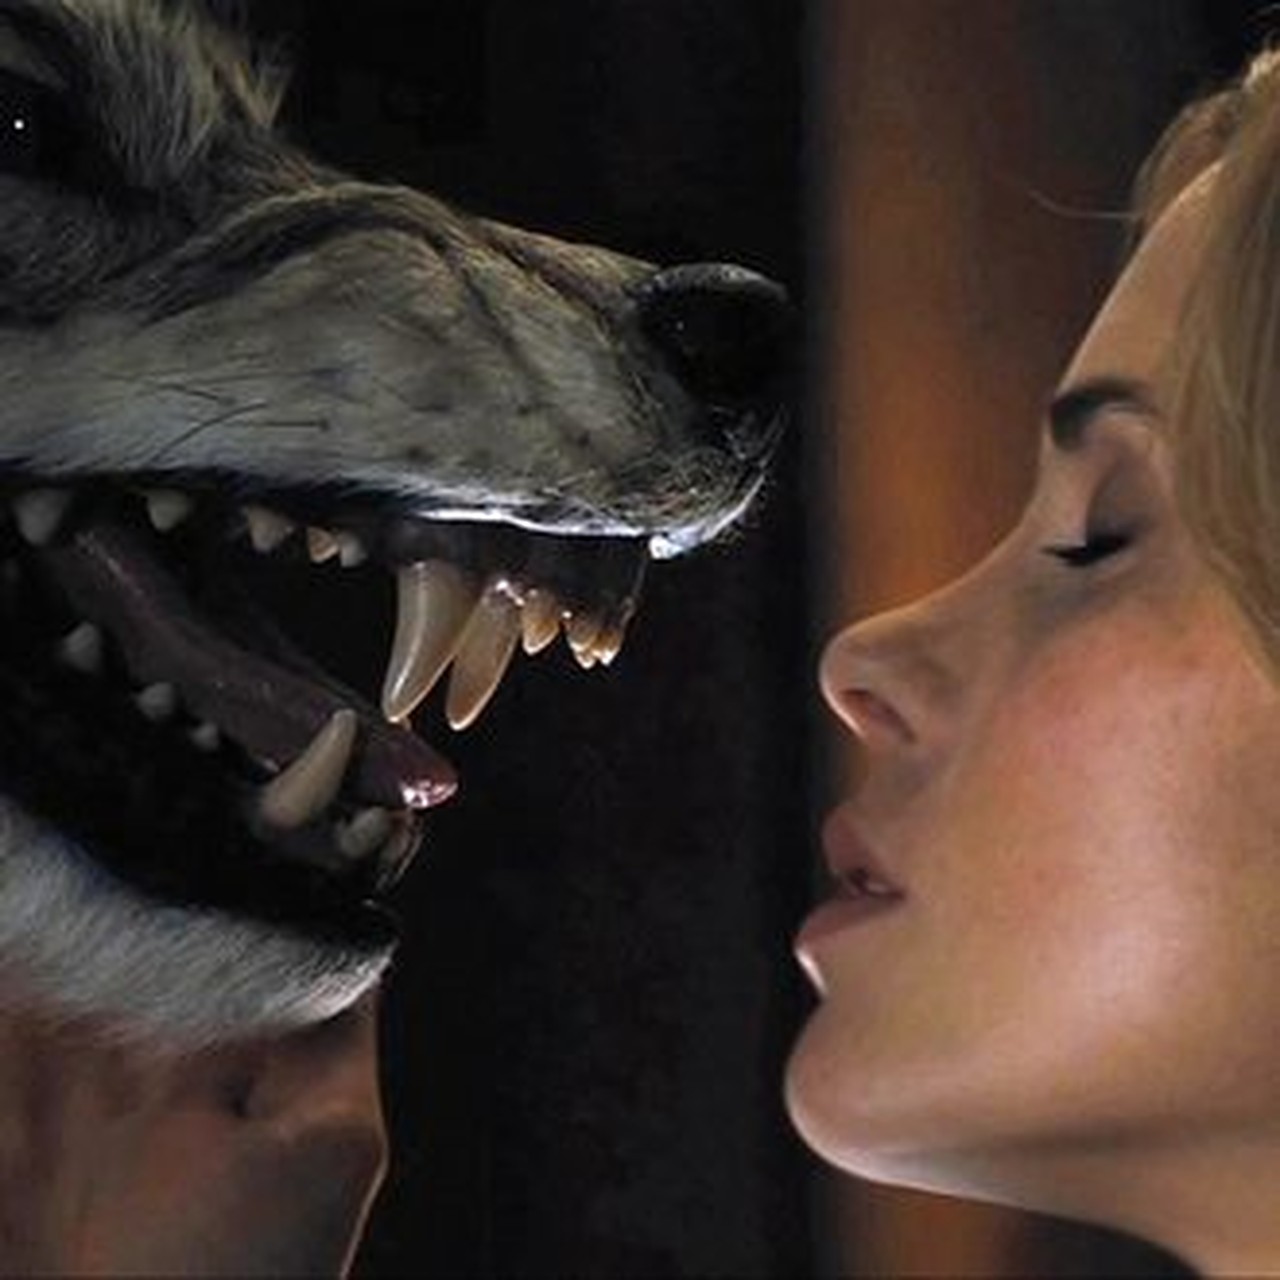 Scream Of The Wolf' Exclusive Trailer: Werewolves Get Meta